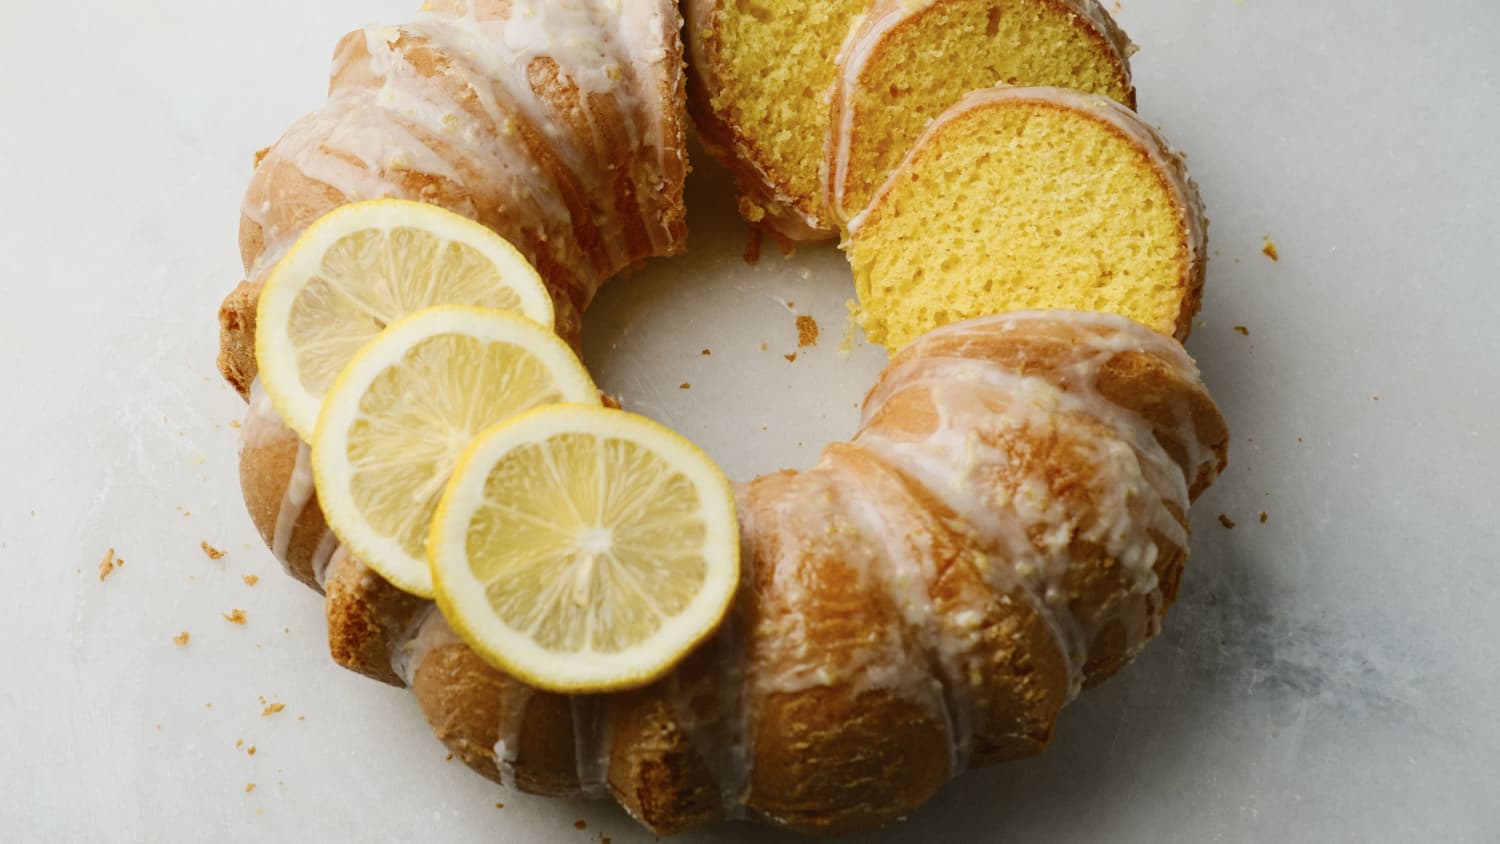 Review: Cake Maternity Lemon Zest and Dark Croissant - WideCurves